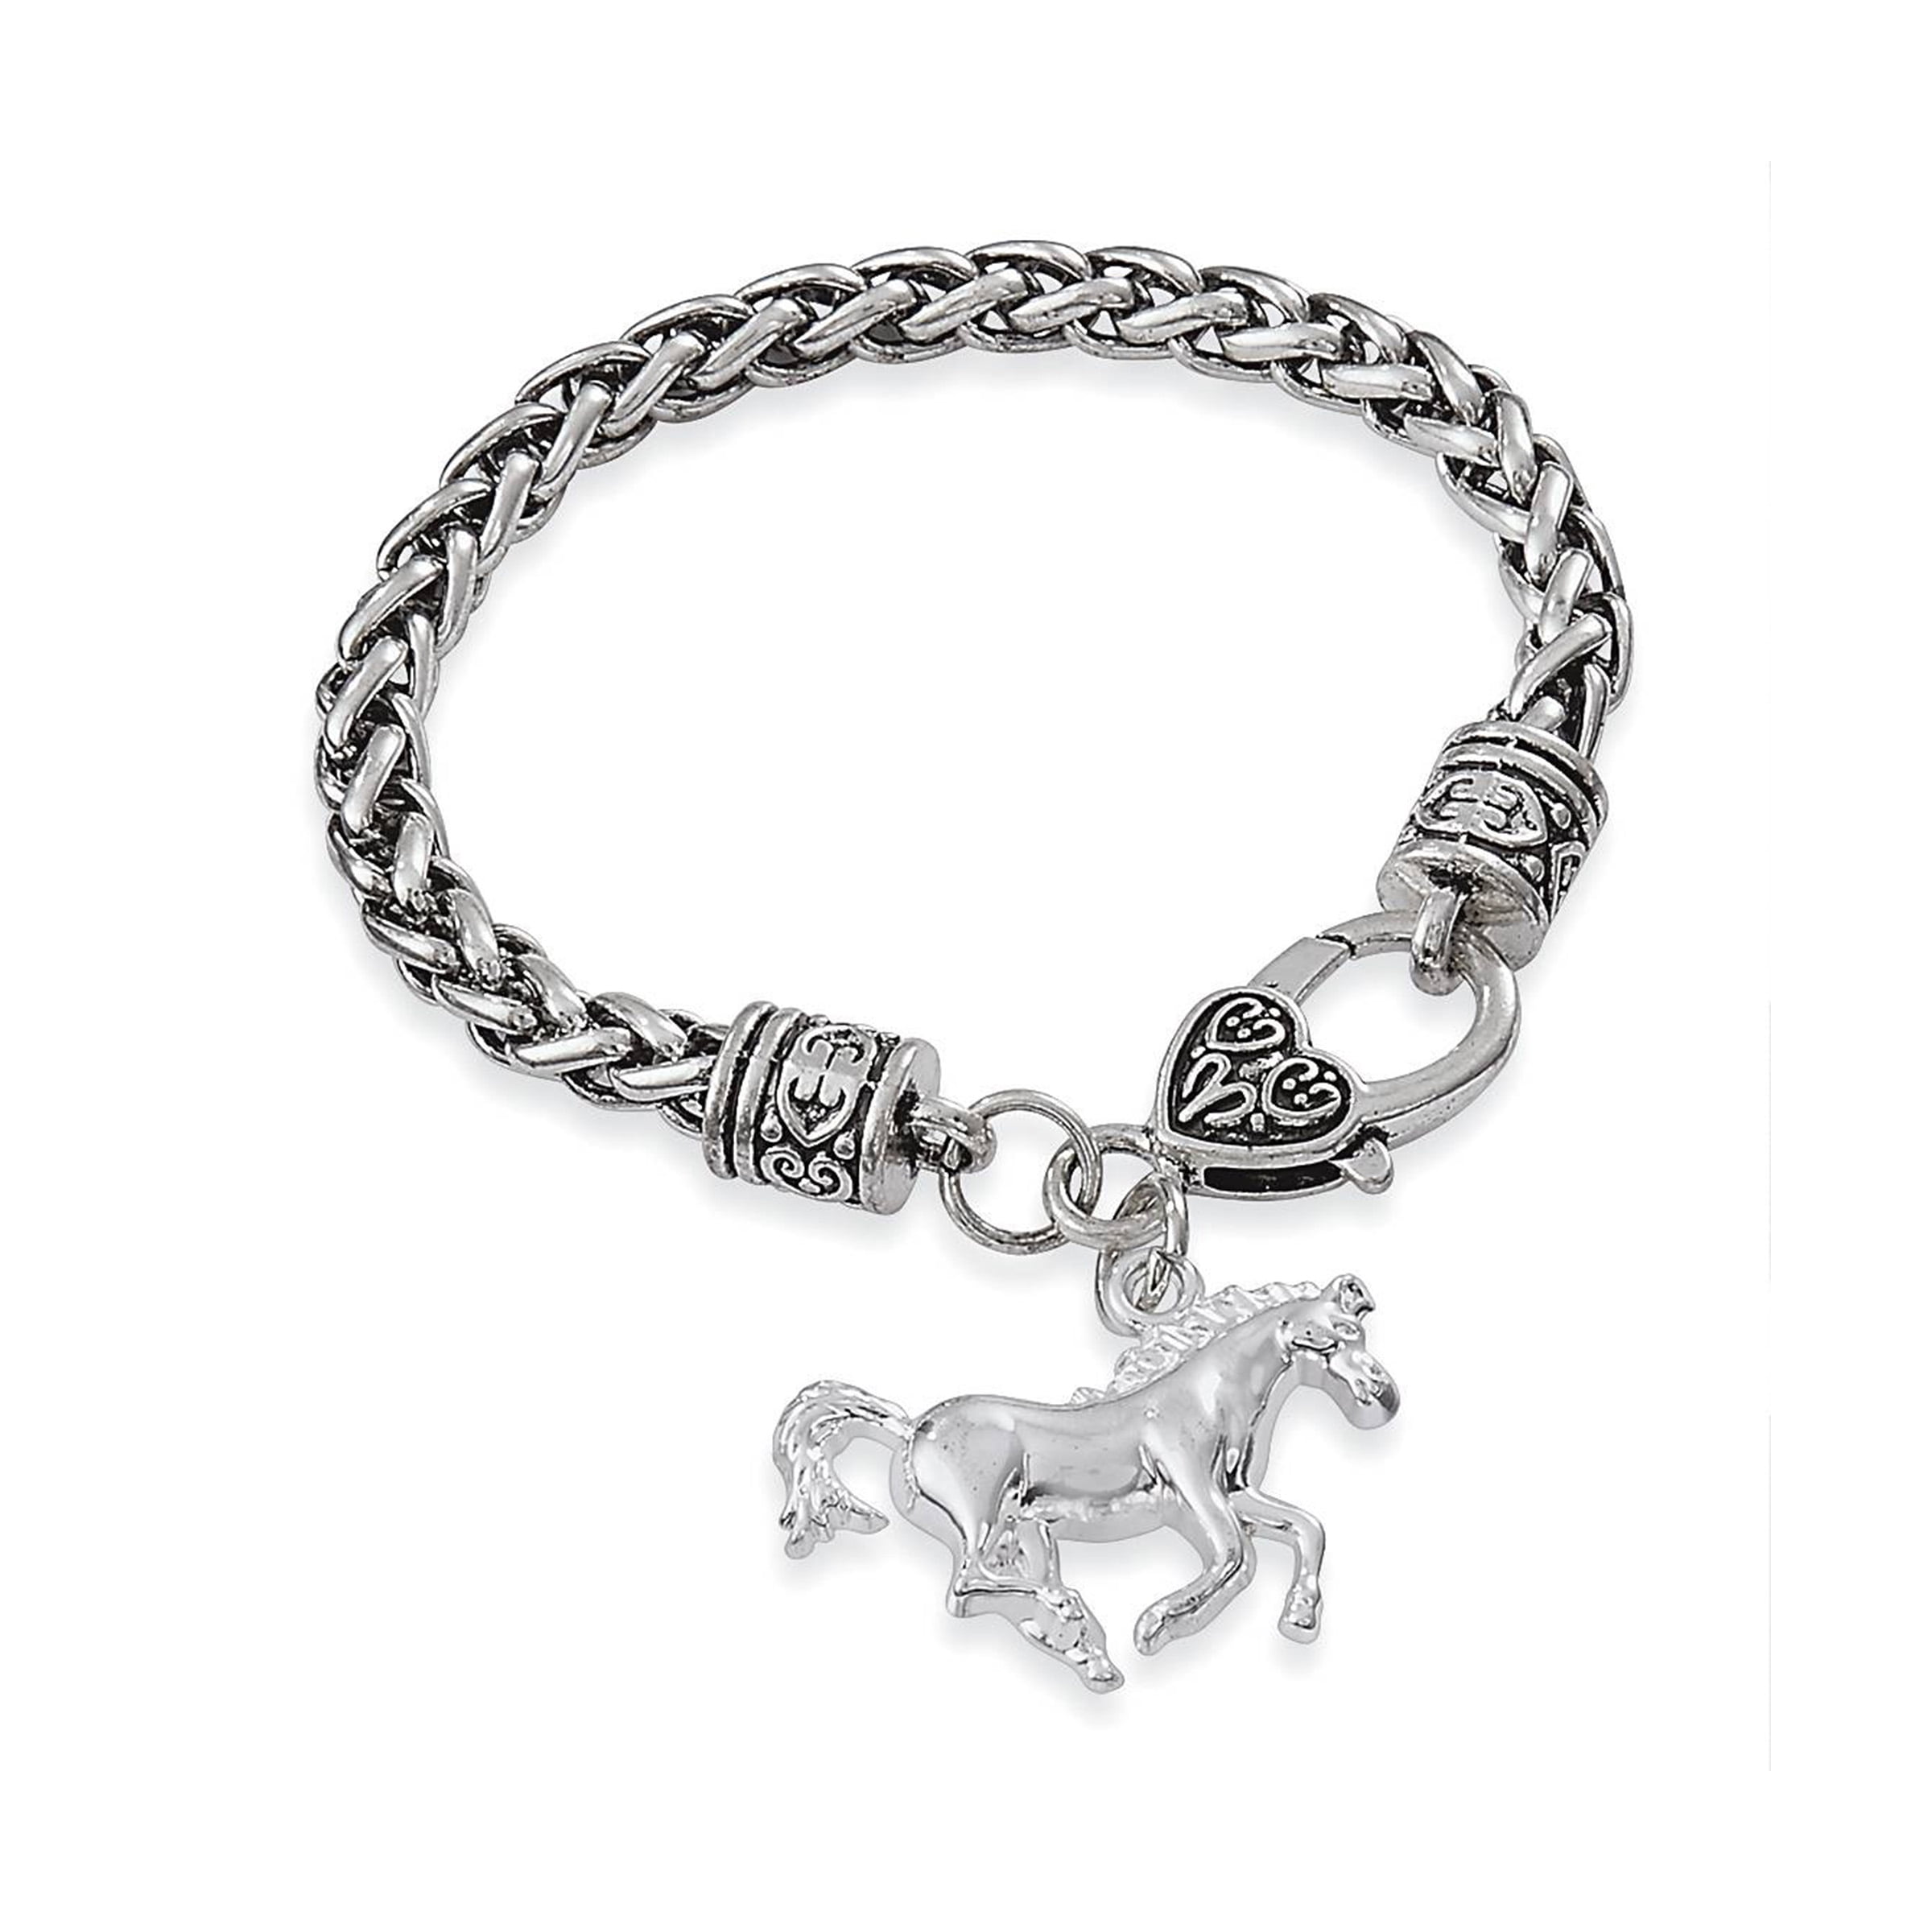 Get Western Bracelets in Wholesale at Kanhai Jewels